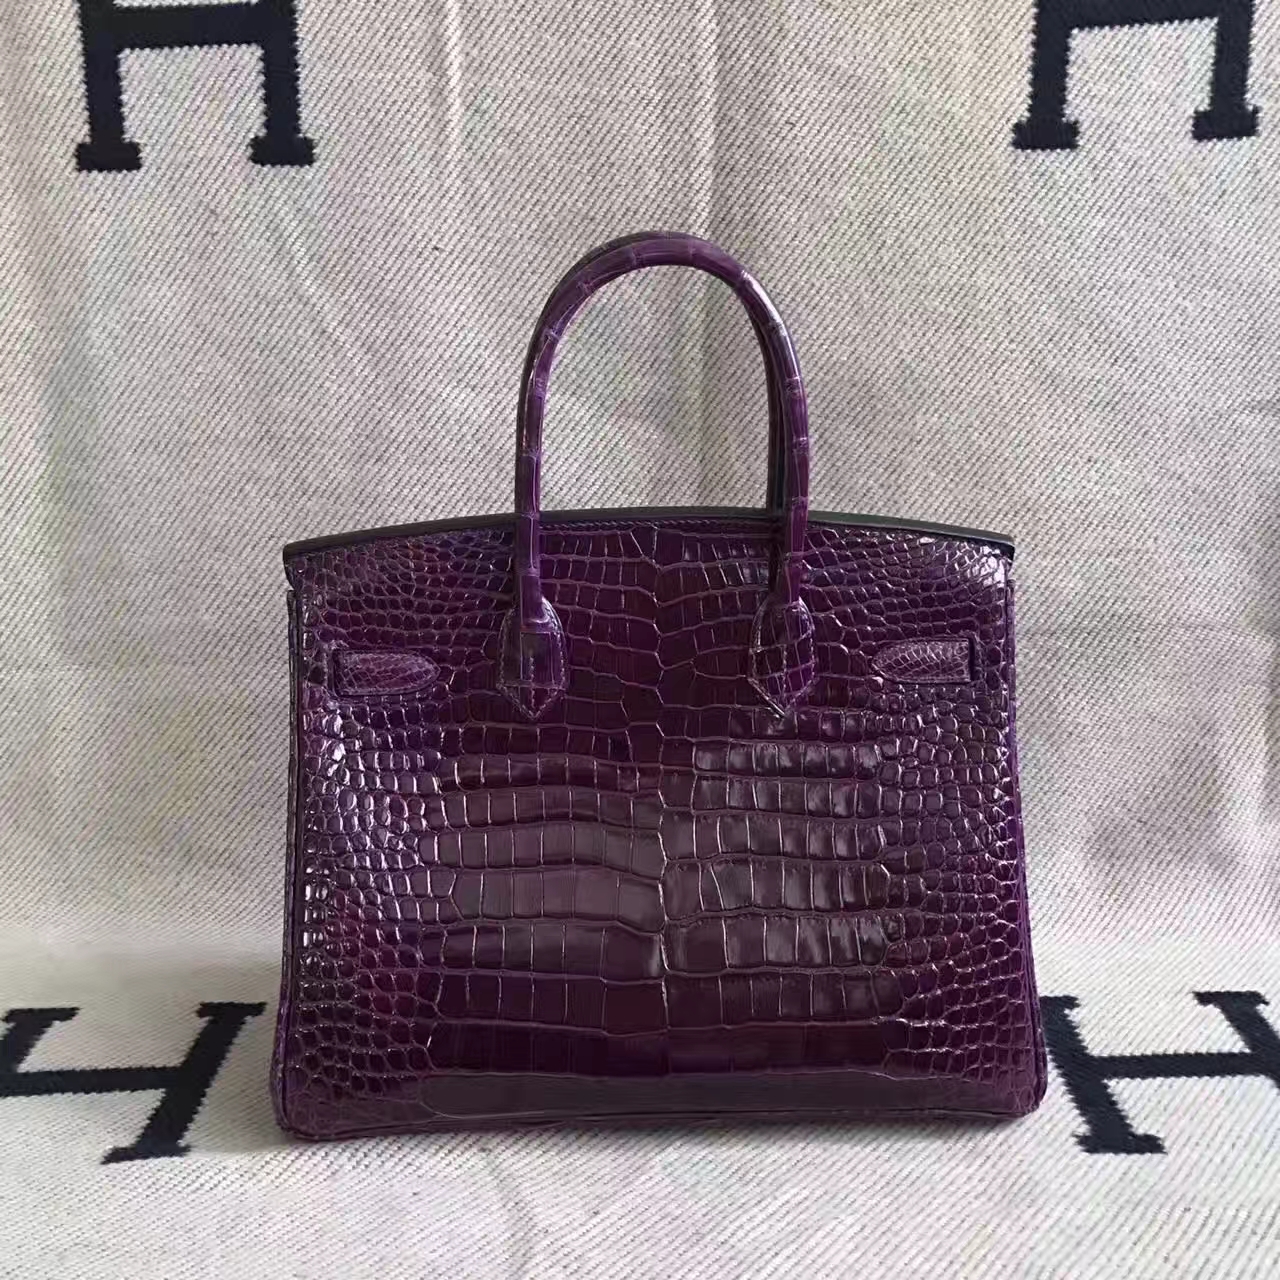 Wholesale Hermes Amethyst Purple Porosus Shiny Leather Birkin30cm Handbag